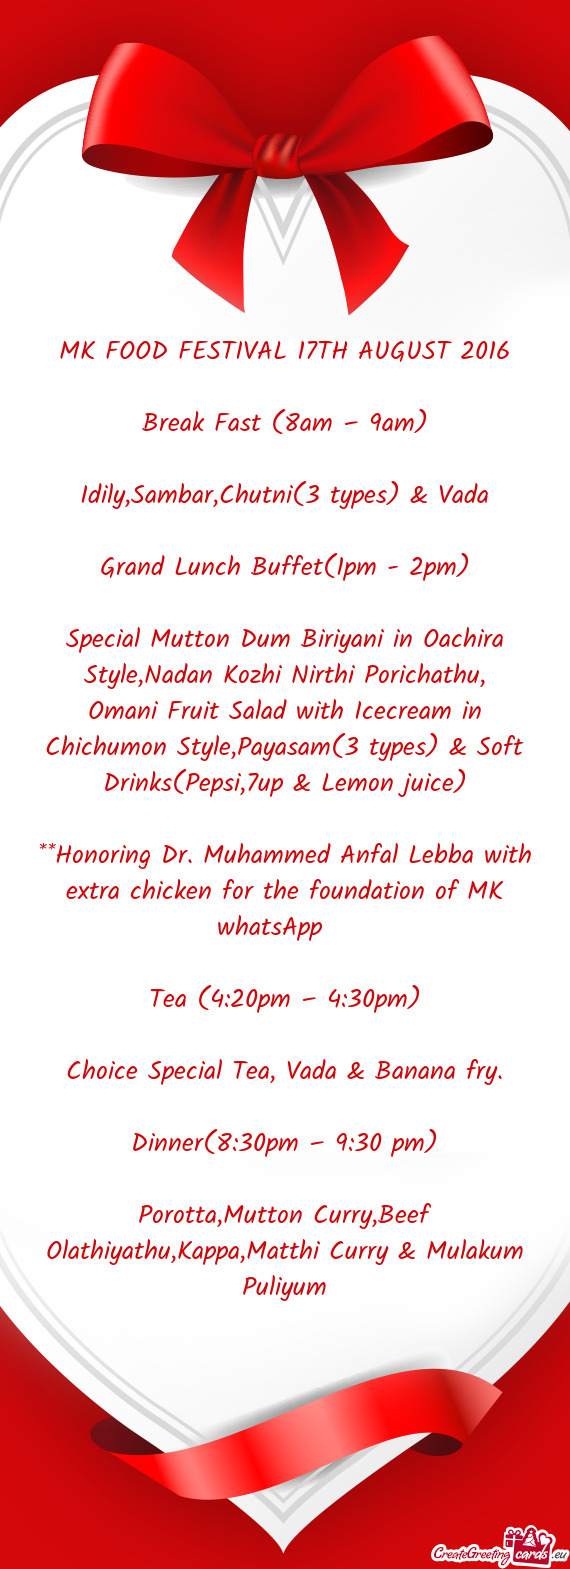 Grand Lunch Buffet(1pm - 2pm)